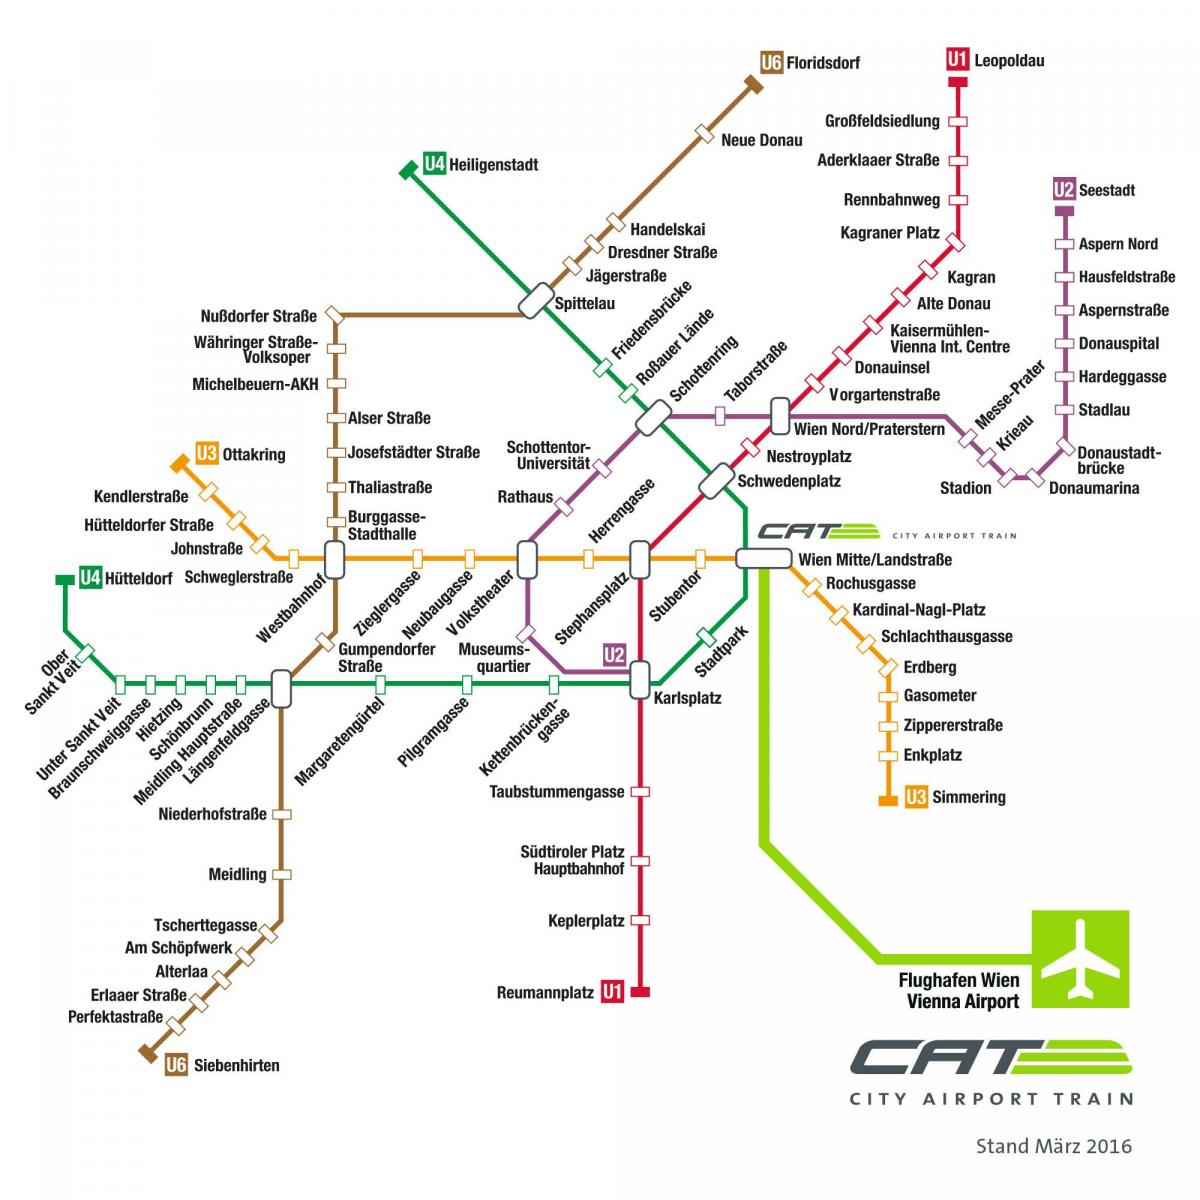 Vienna airport train station mapa